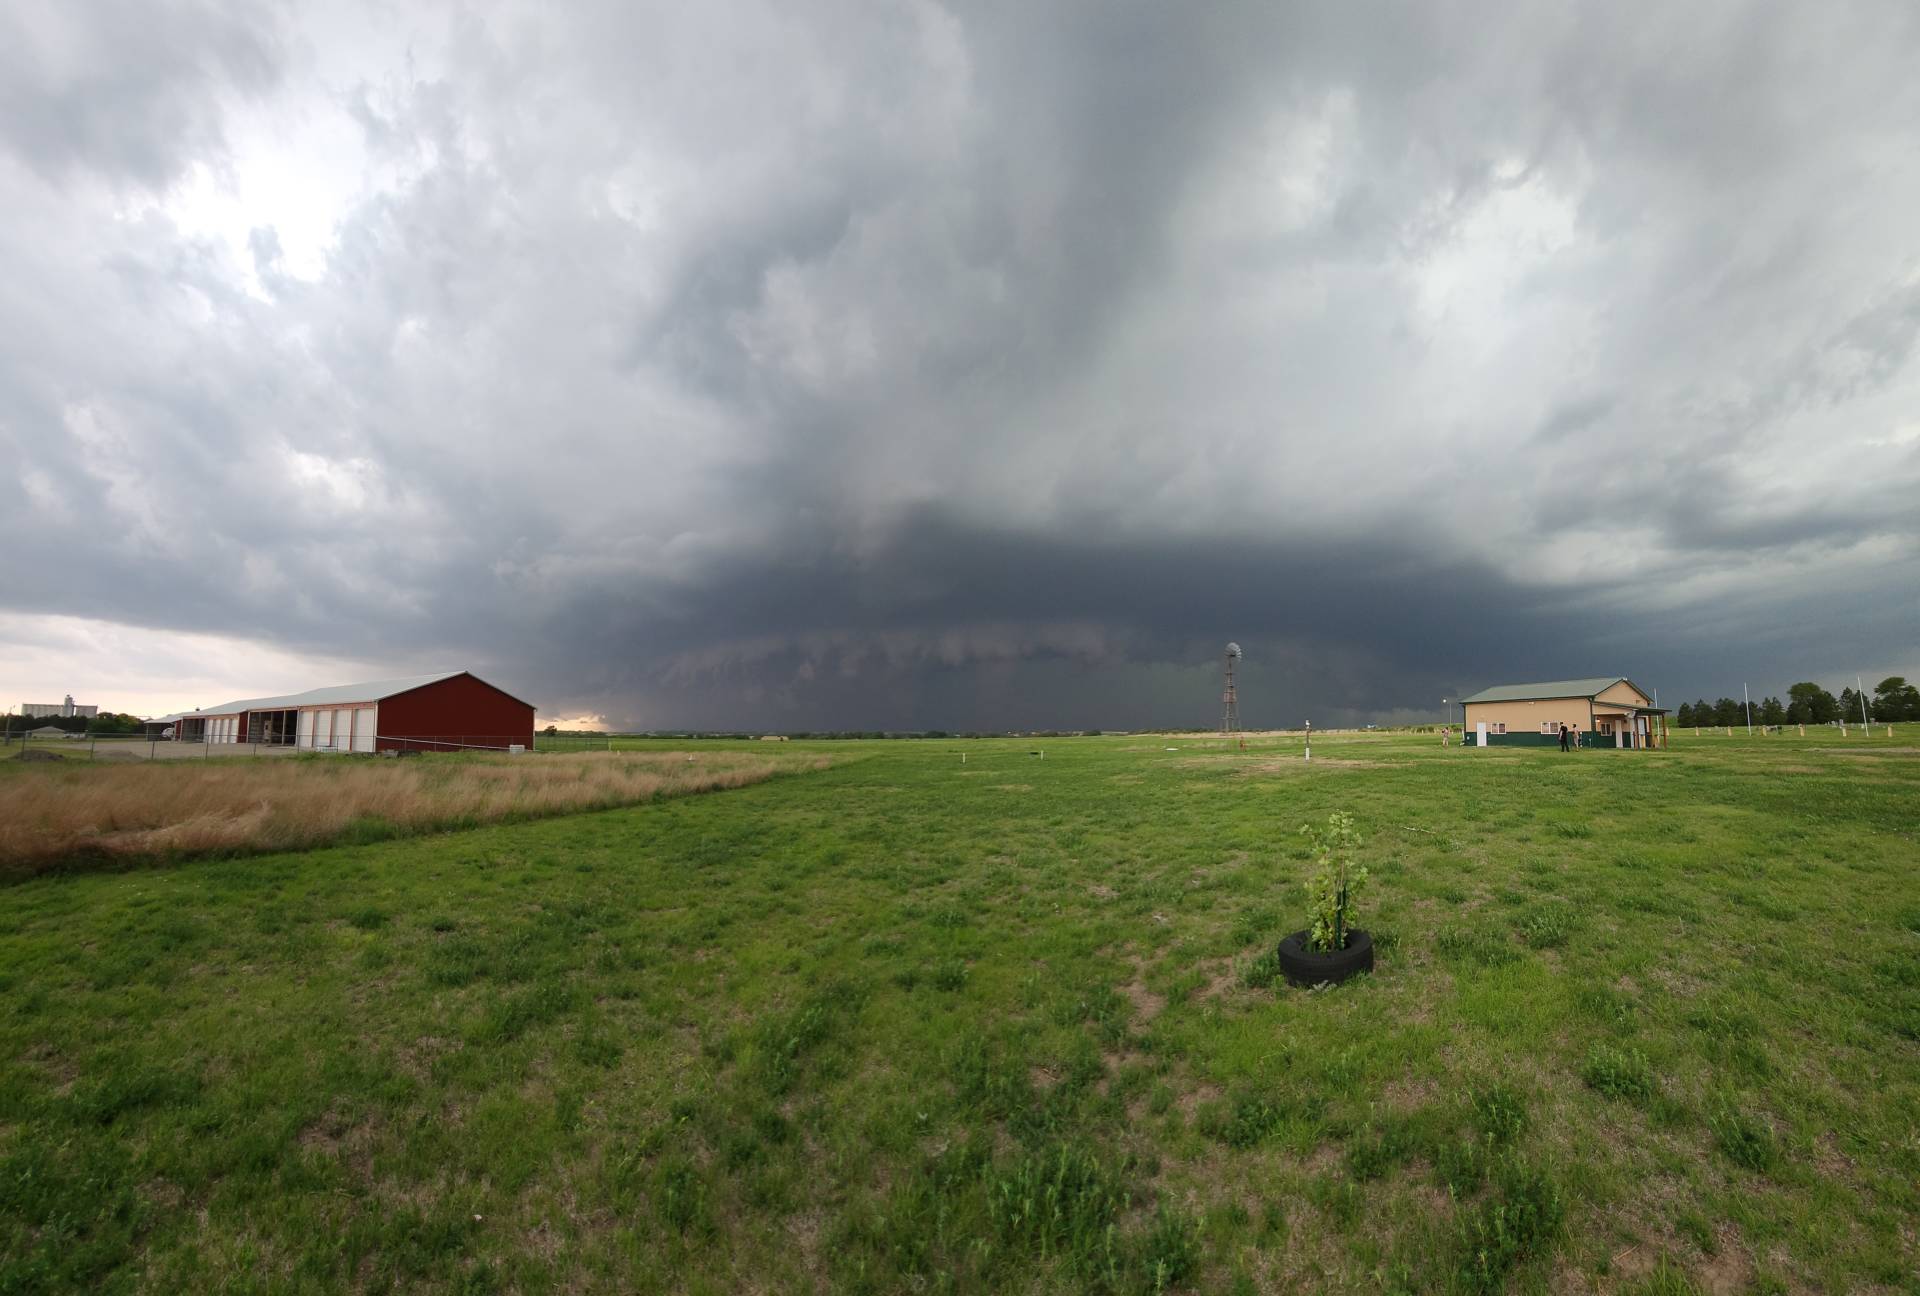 Monster of a storm rolling over Dorrance, Kansas 03:55 PM @NWSDodgeCity #kswx